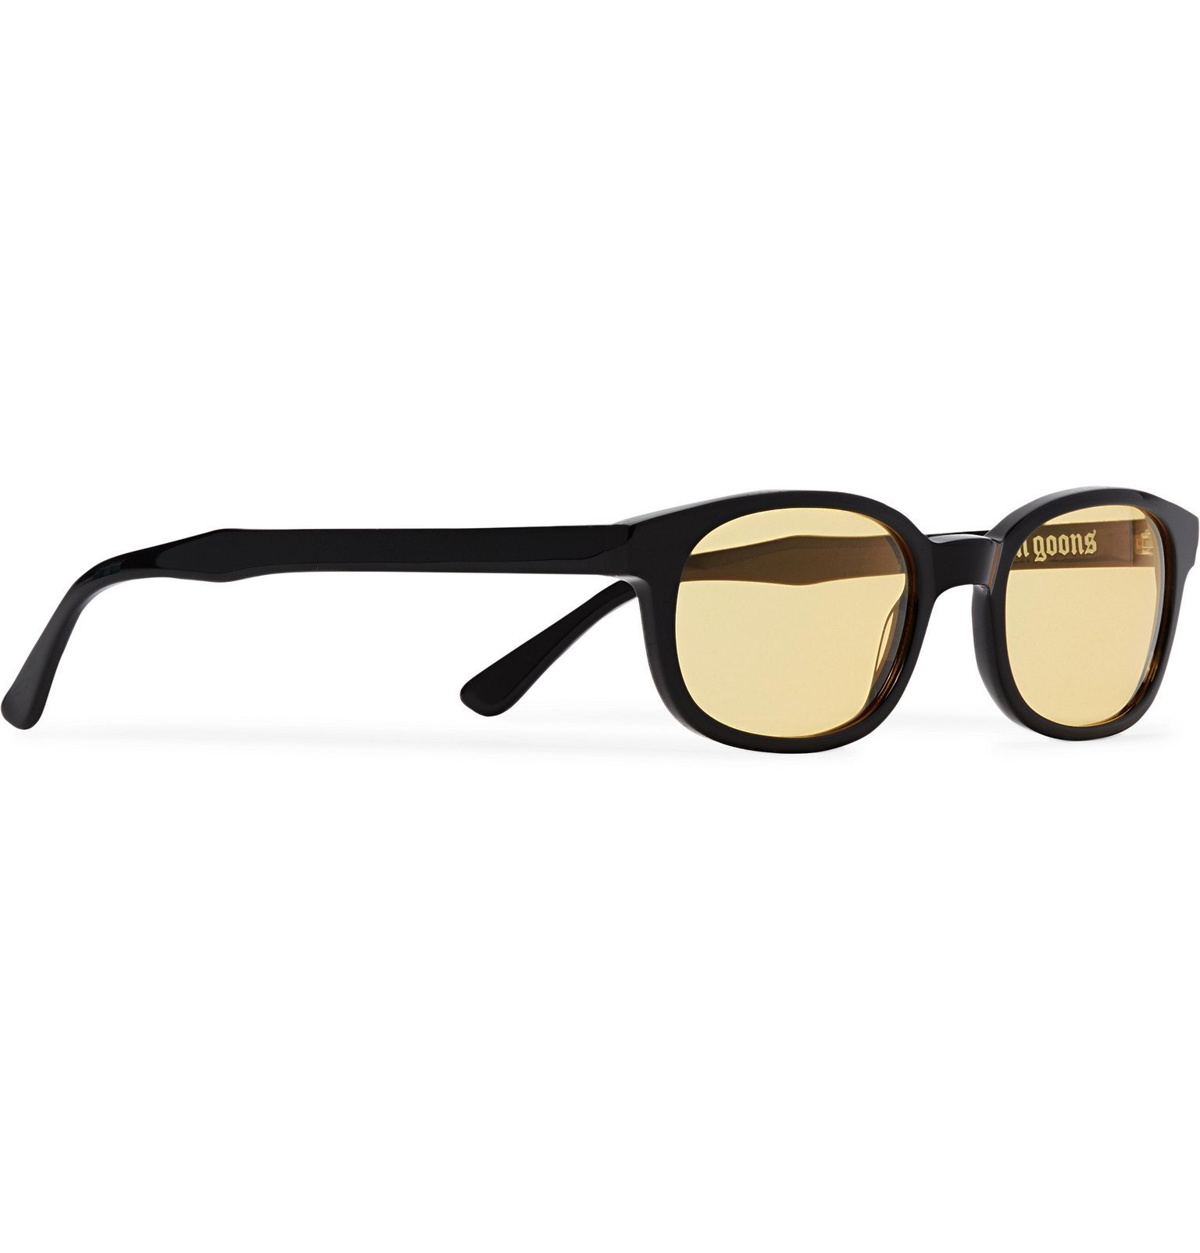 Noon Goons - Unibase Square-Frame Acetate Sunglasses - Black Noon 